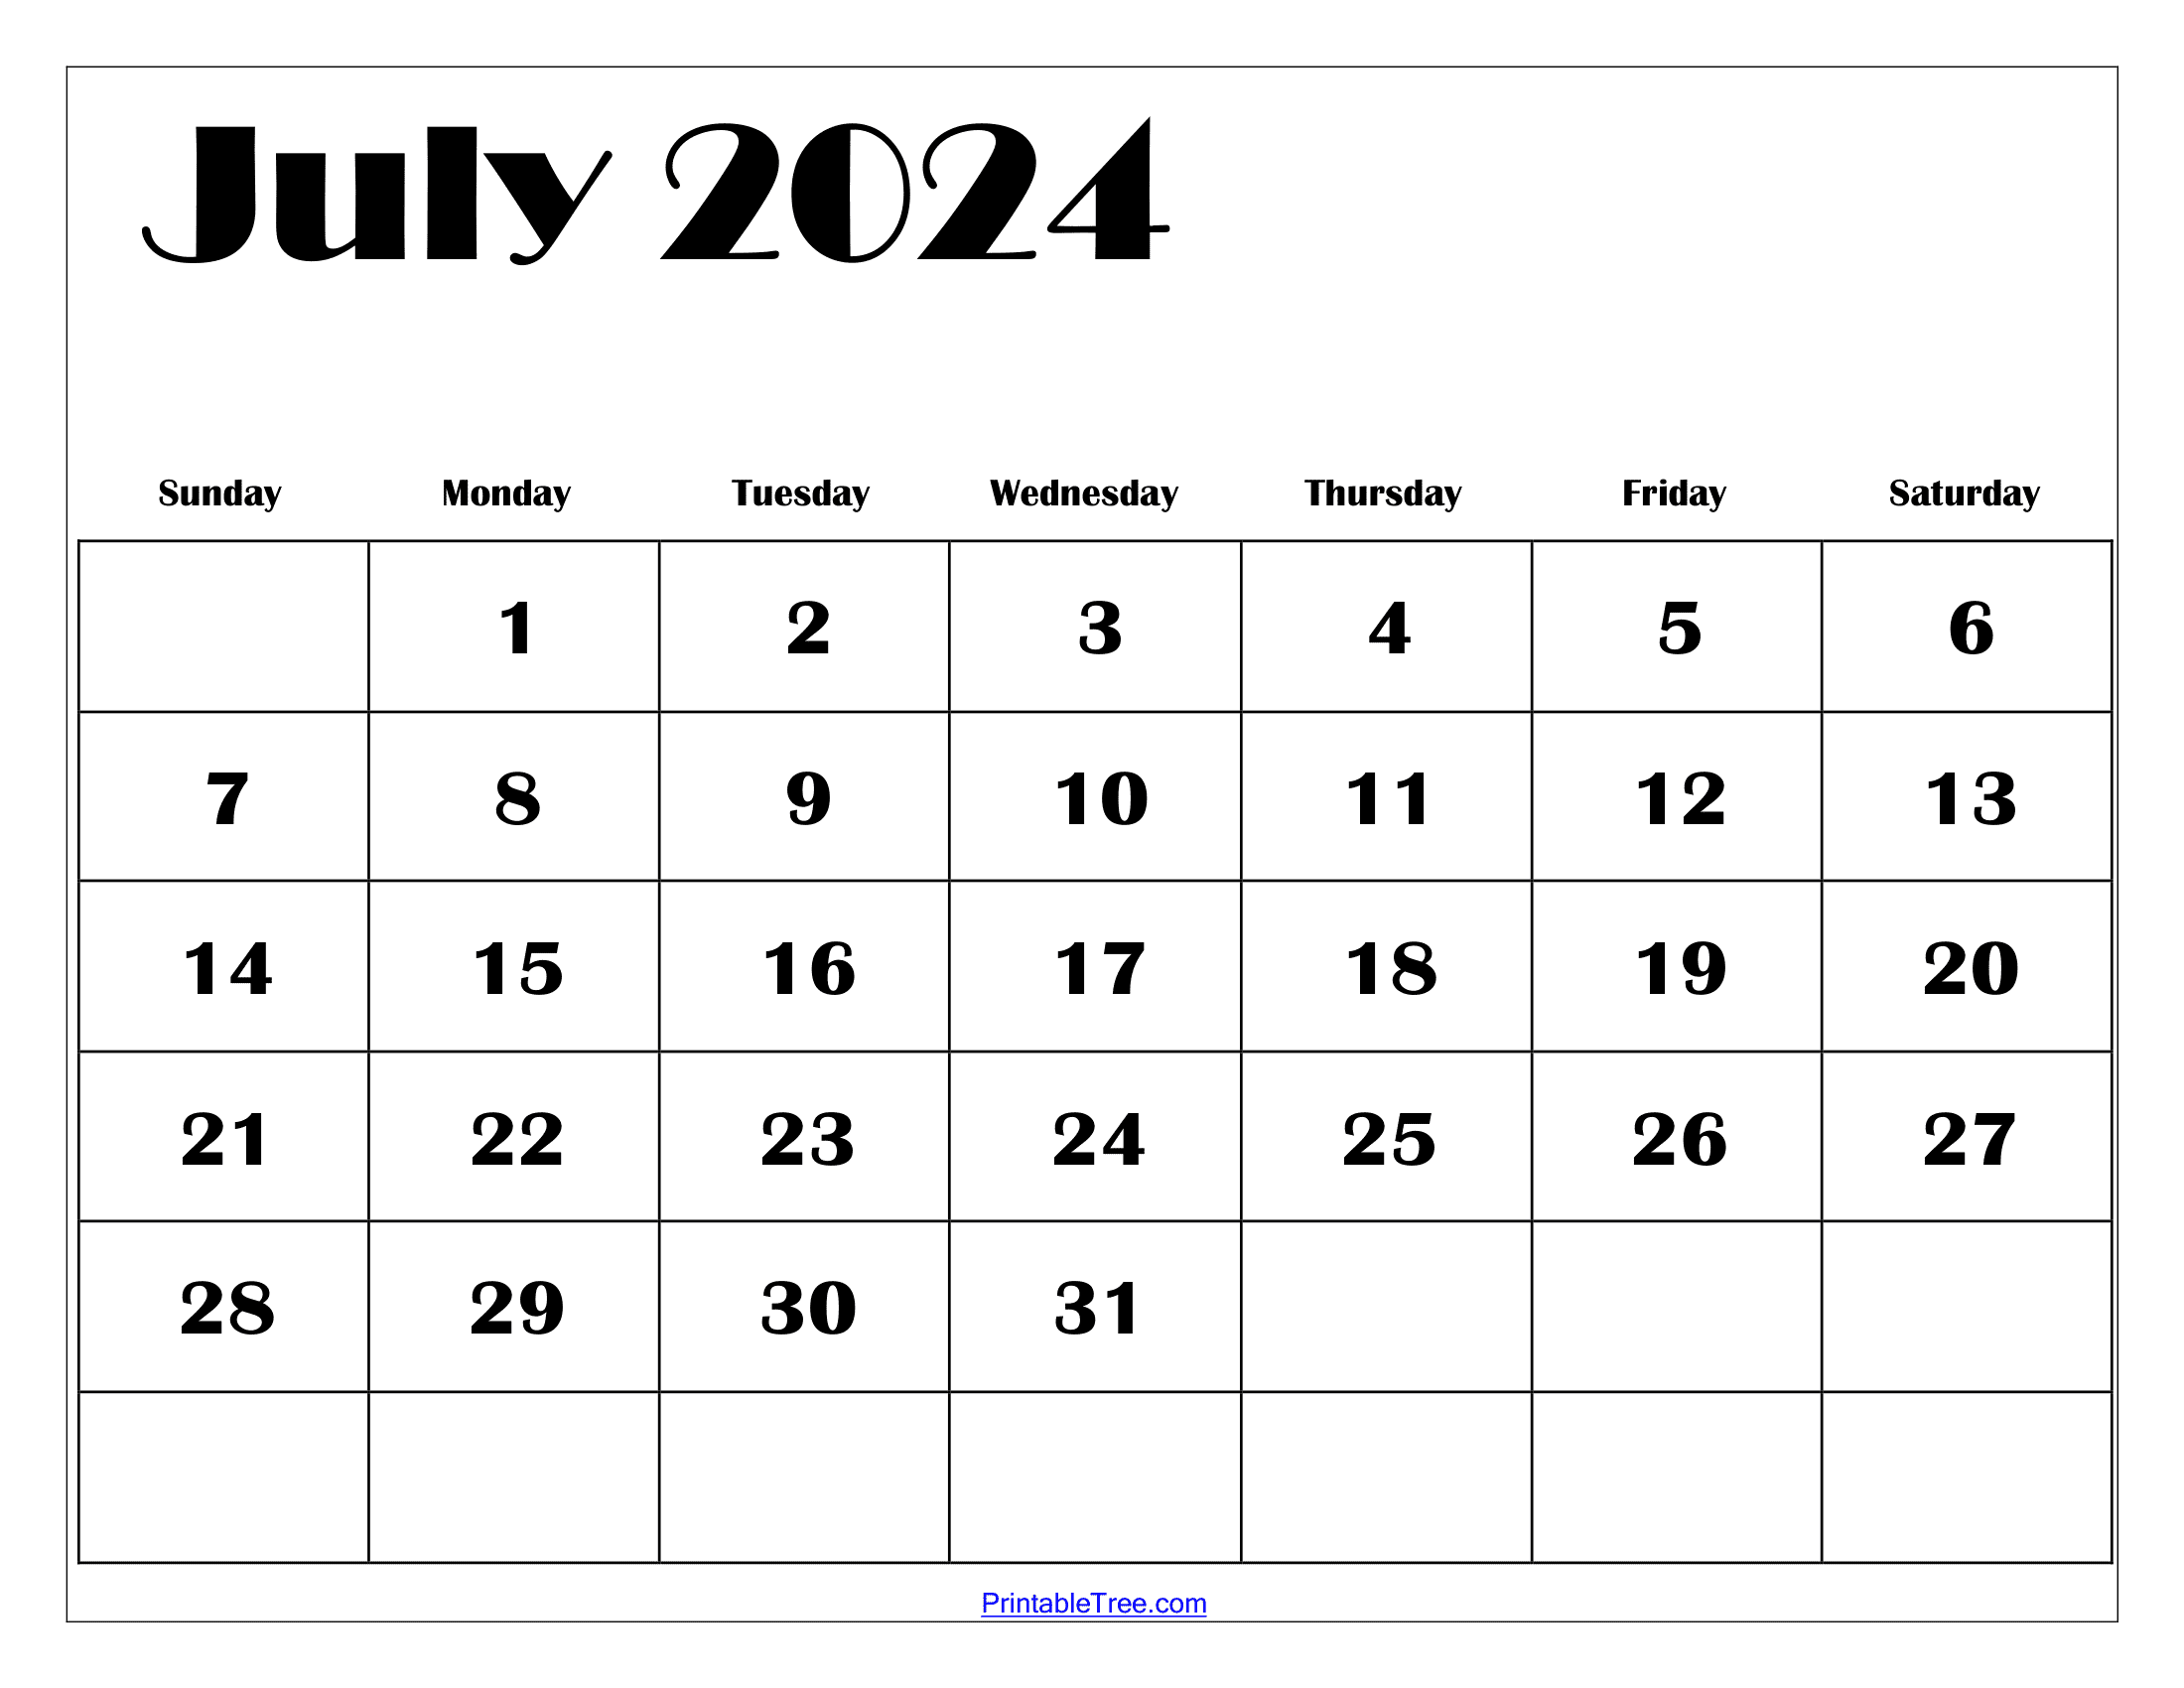 July 2024 Calendar Printable Pdf With Holidays Free Template for Calendar July 2024 Printable